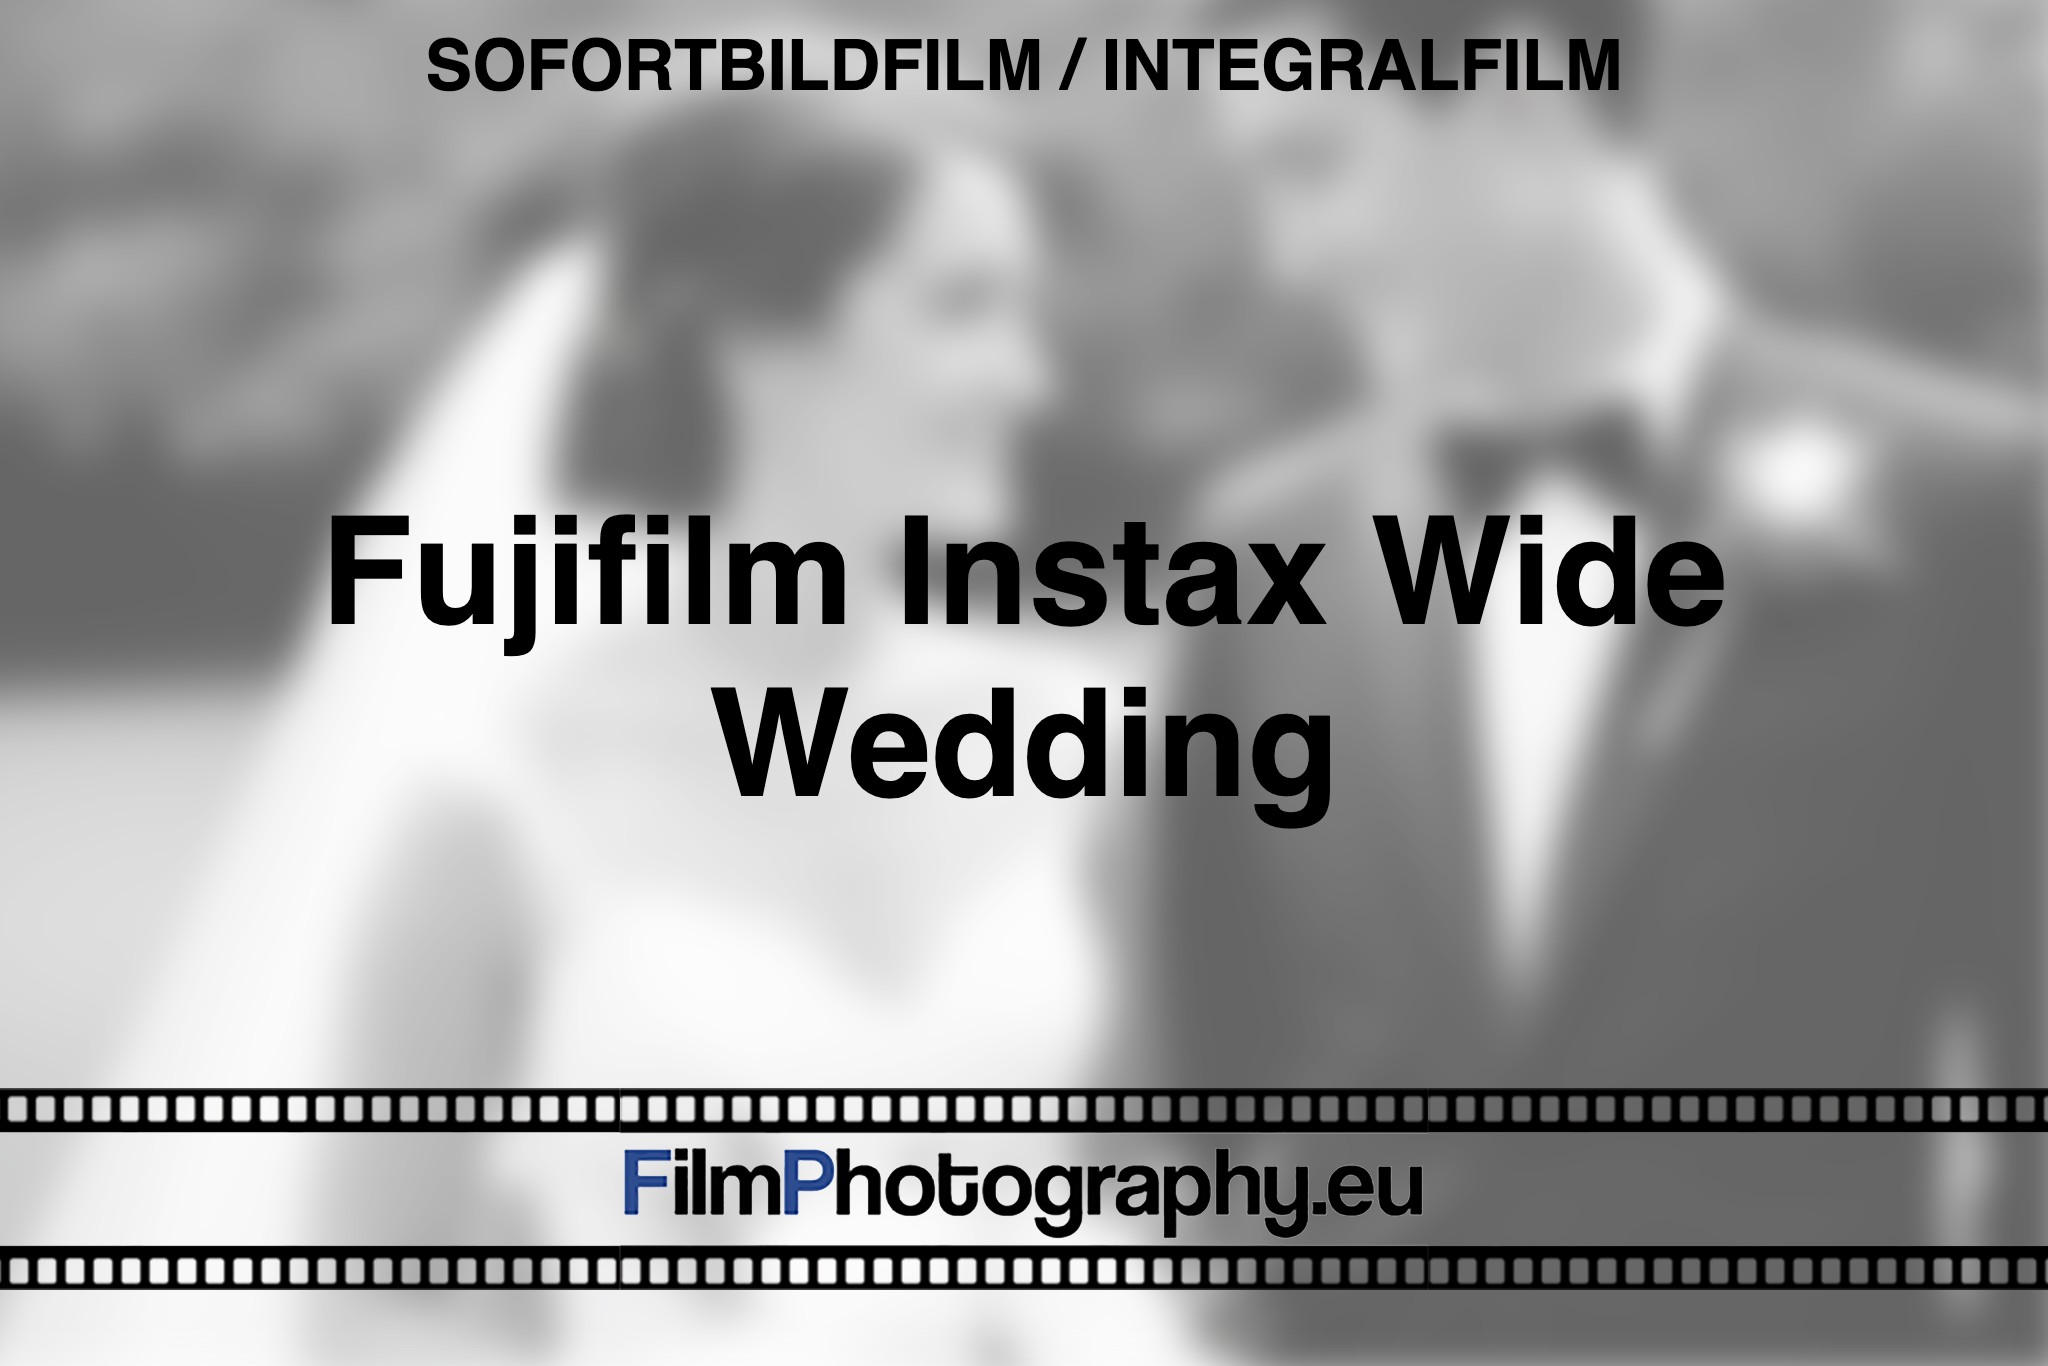 fujifilm-instax-wide-wedding-sofortbildfilm-integralfilm-fp-bnv